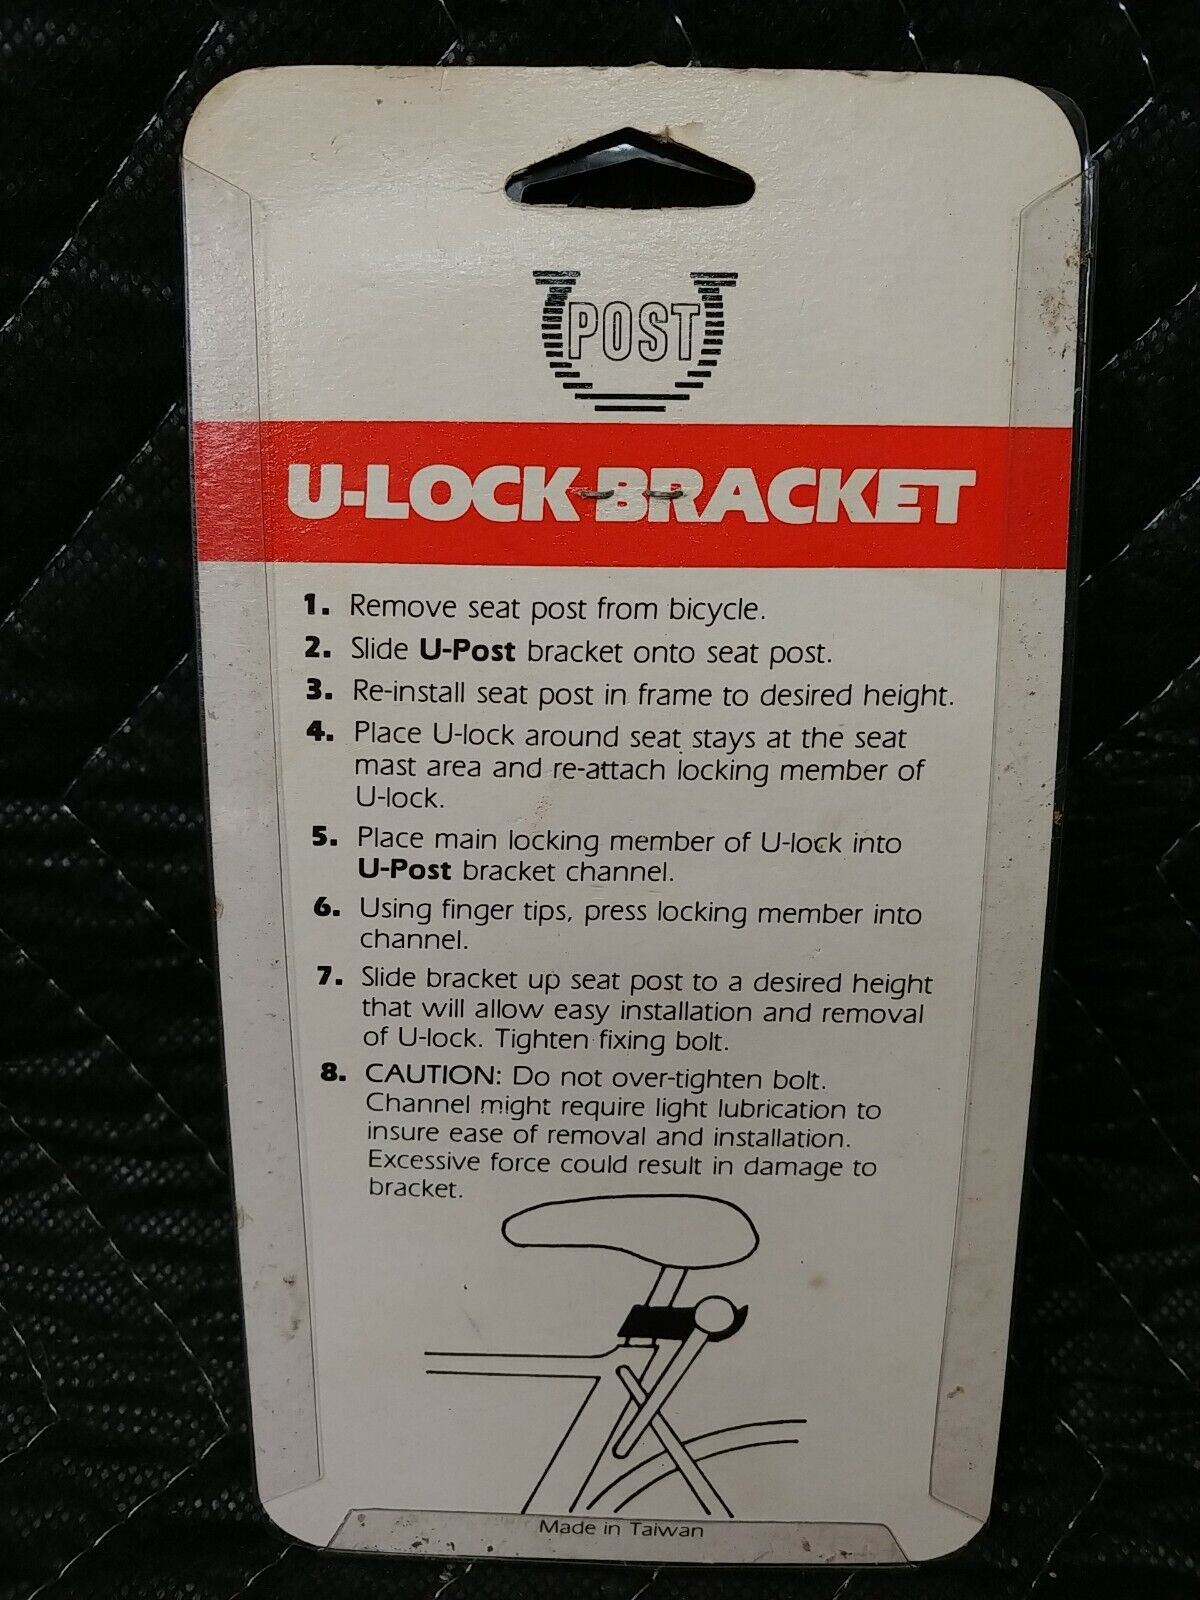 Post U-Lock Bracket for bike lock